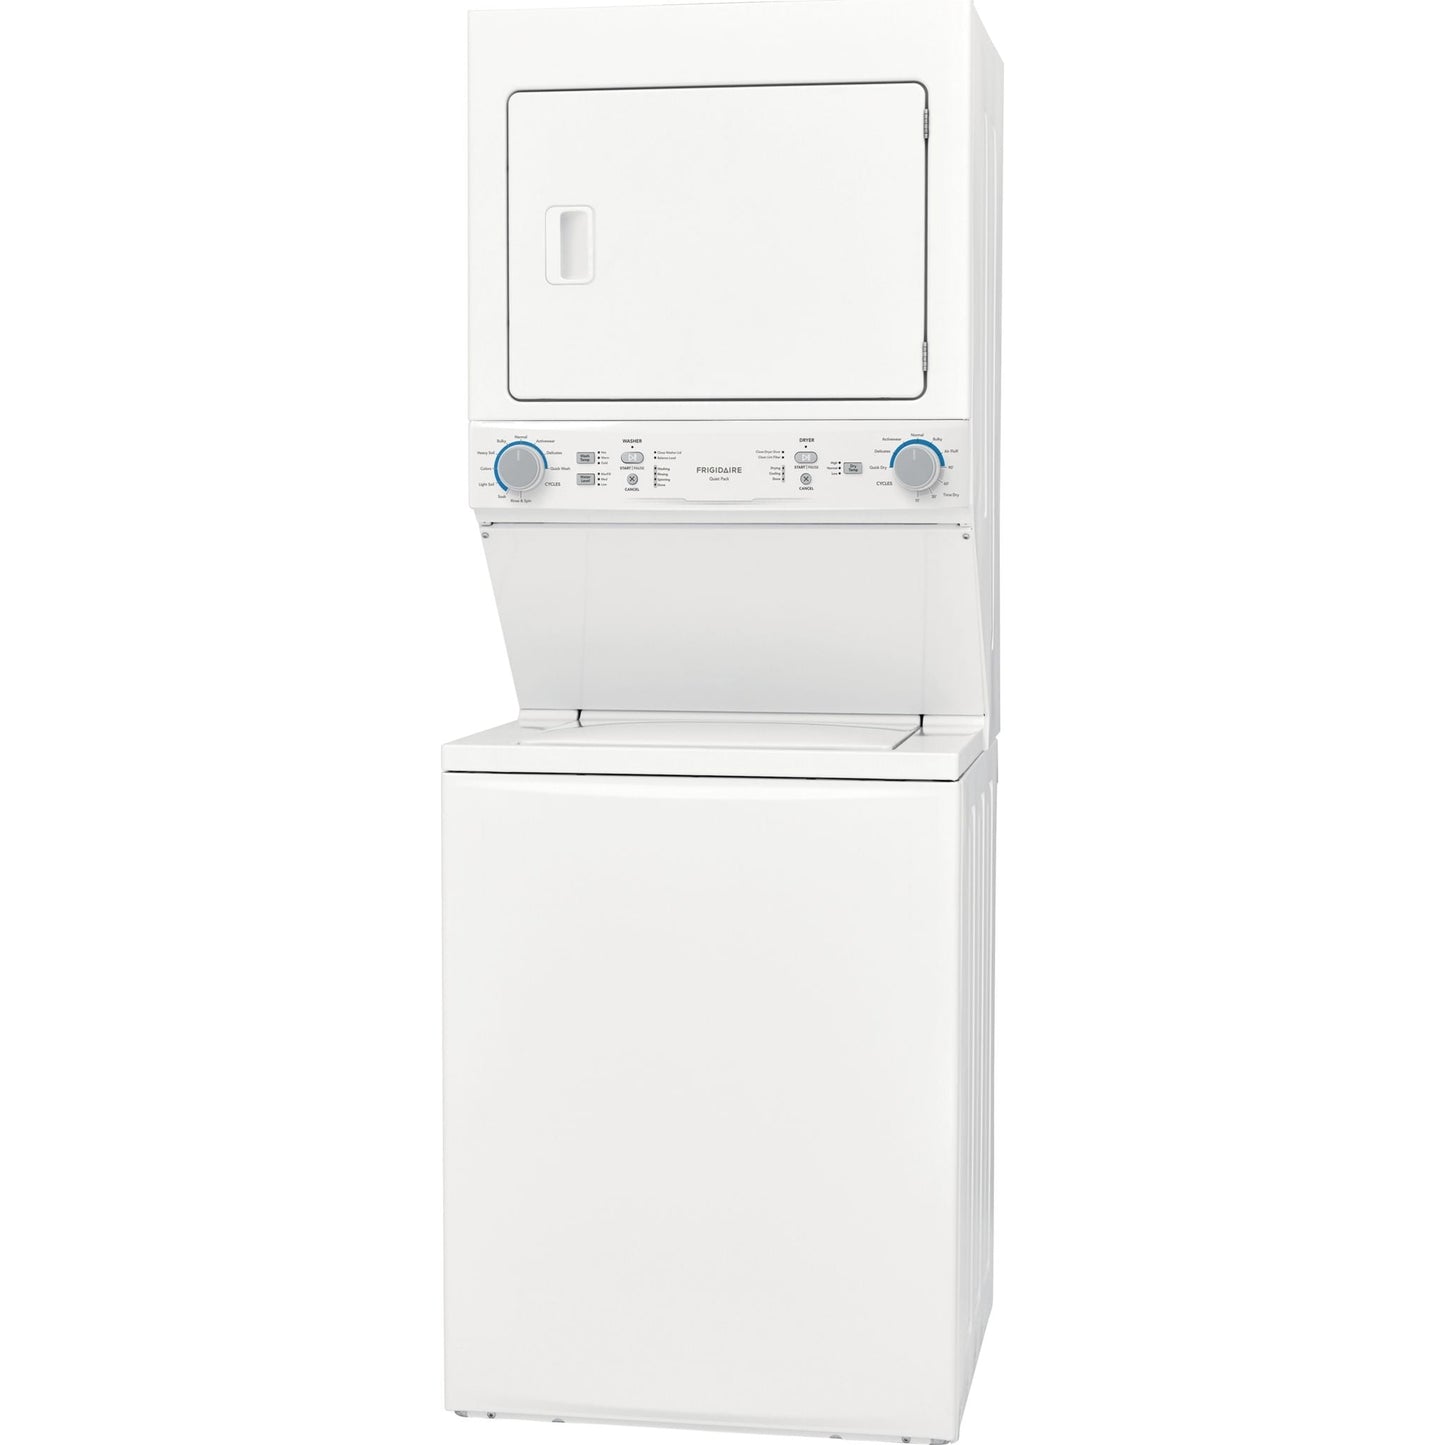 Frigidaire Laundry Stacker (FLCE752CAW) - White